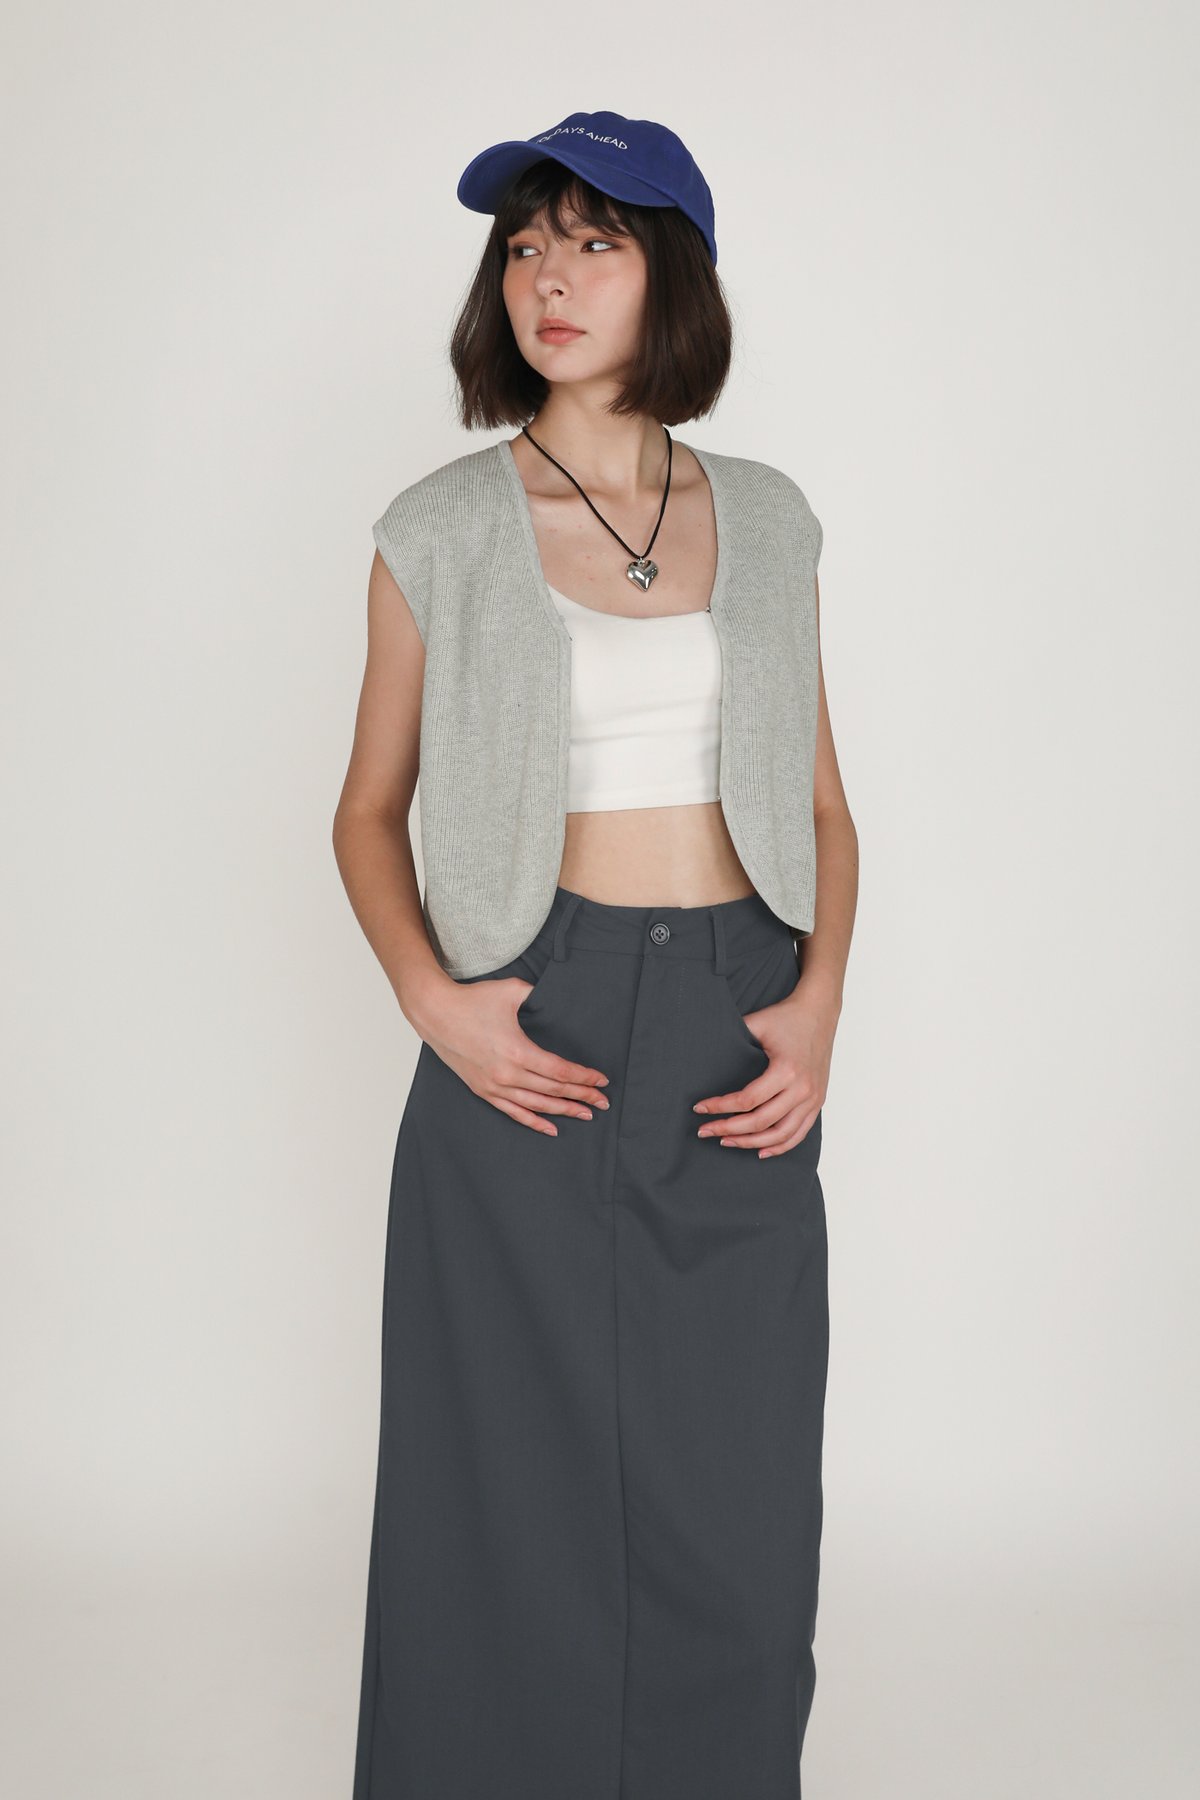 Flyn Tailored Maxi Skirt (Gunmetal Grey)